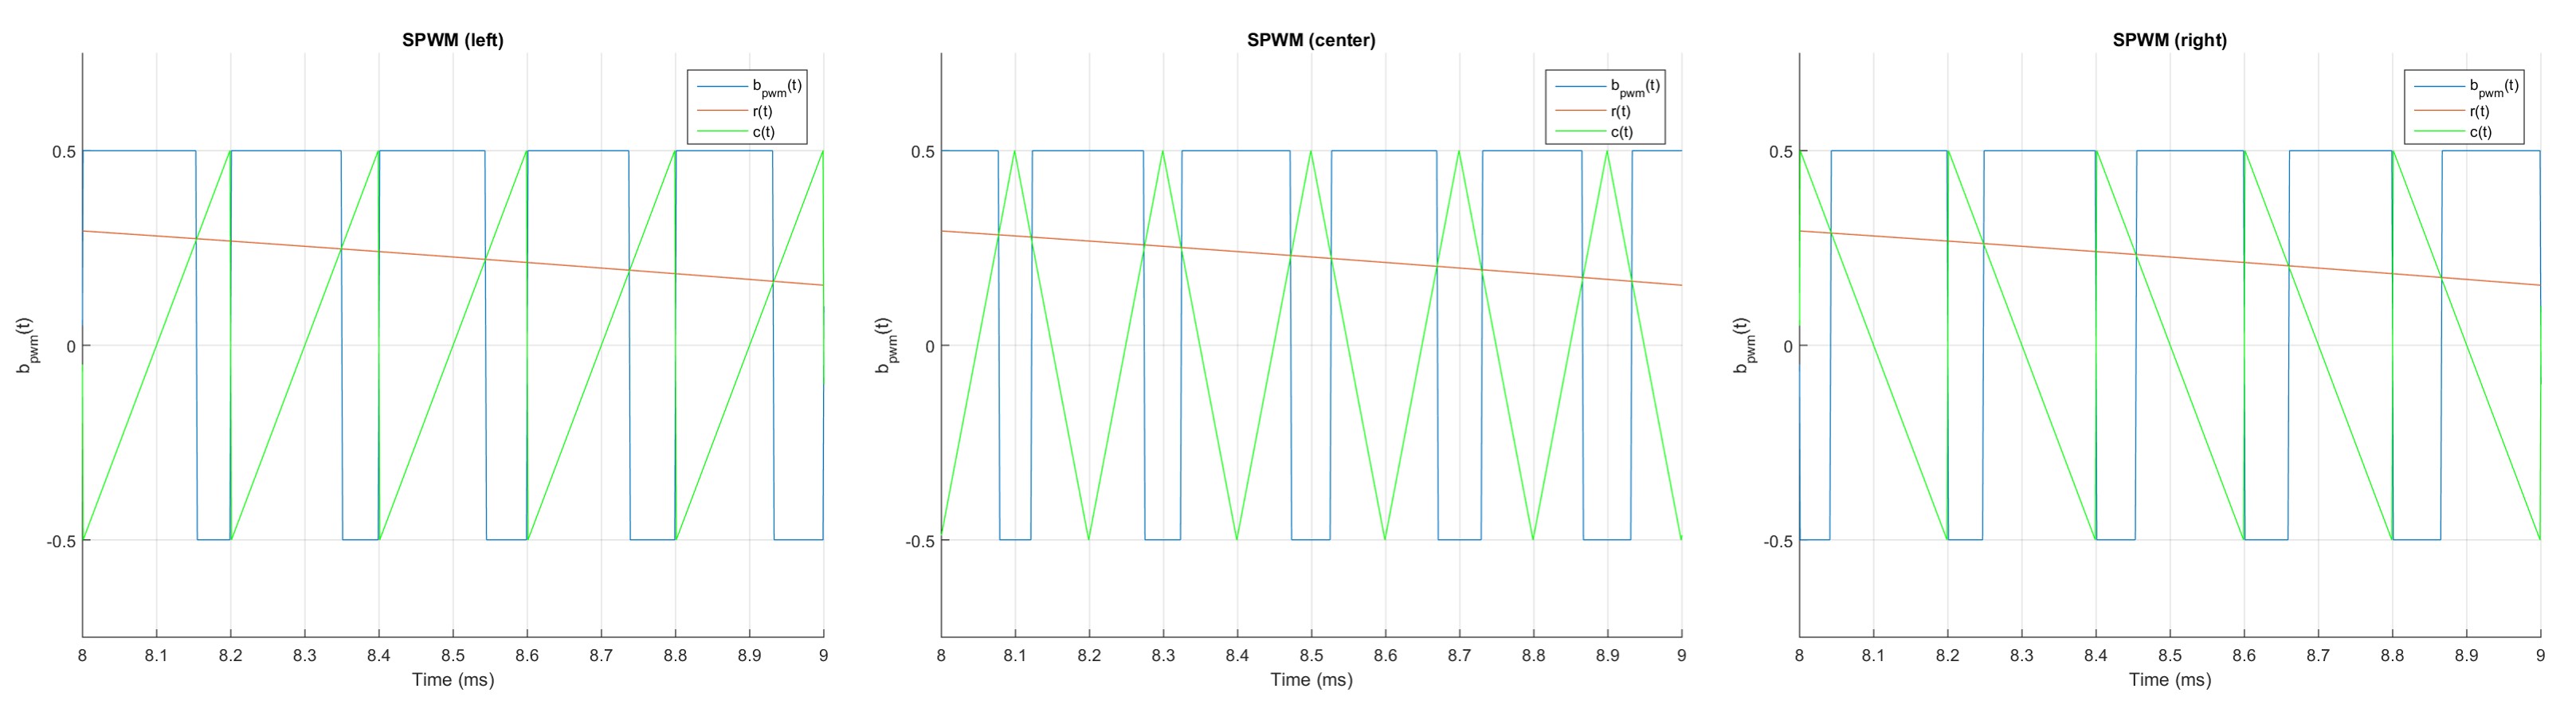 AS5030 magnetic encoder: capturing a PWM signal with an ATSAMD21 – Martin  Bloedorn